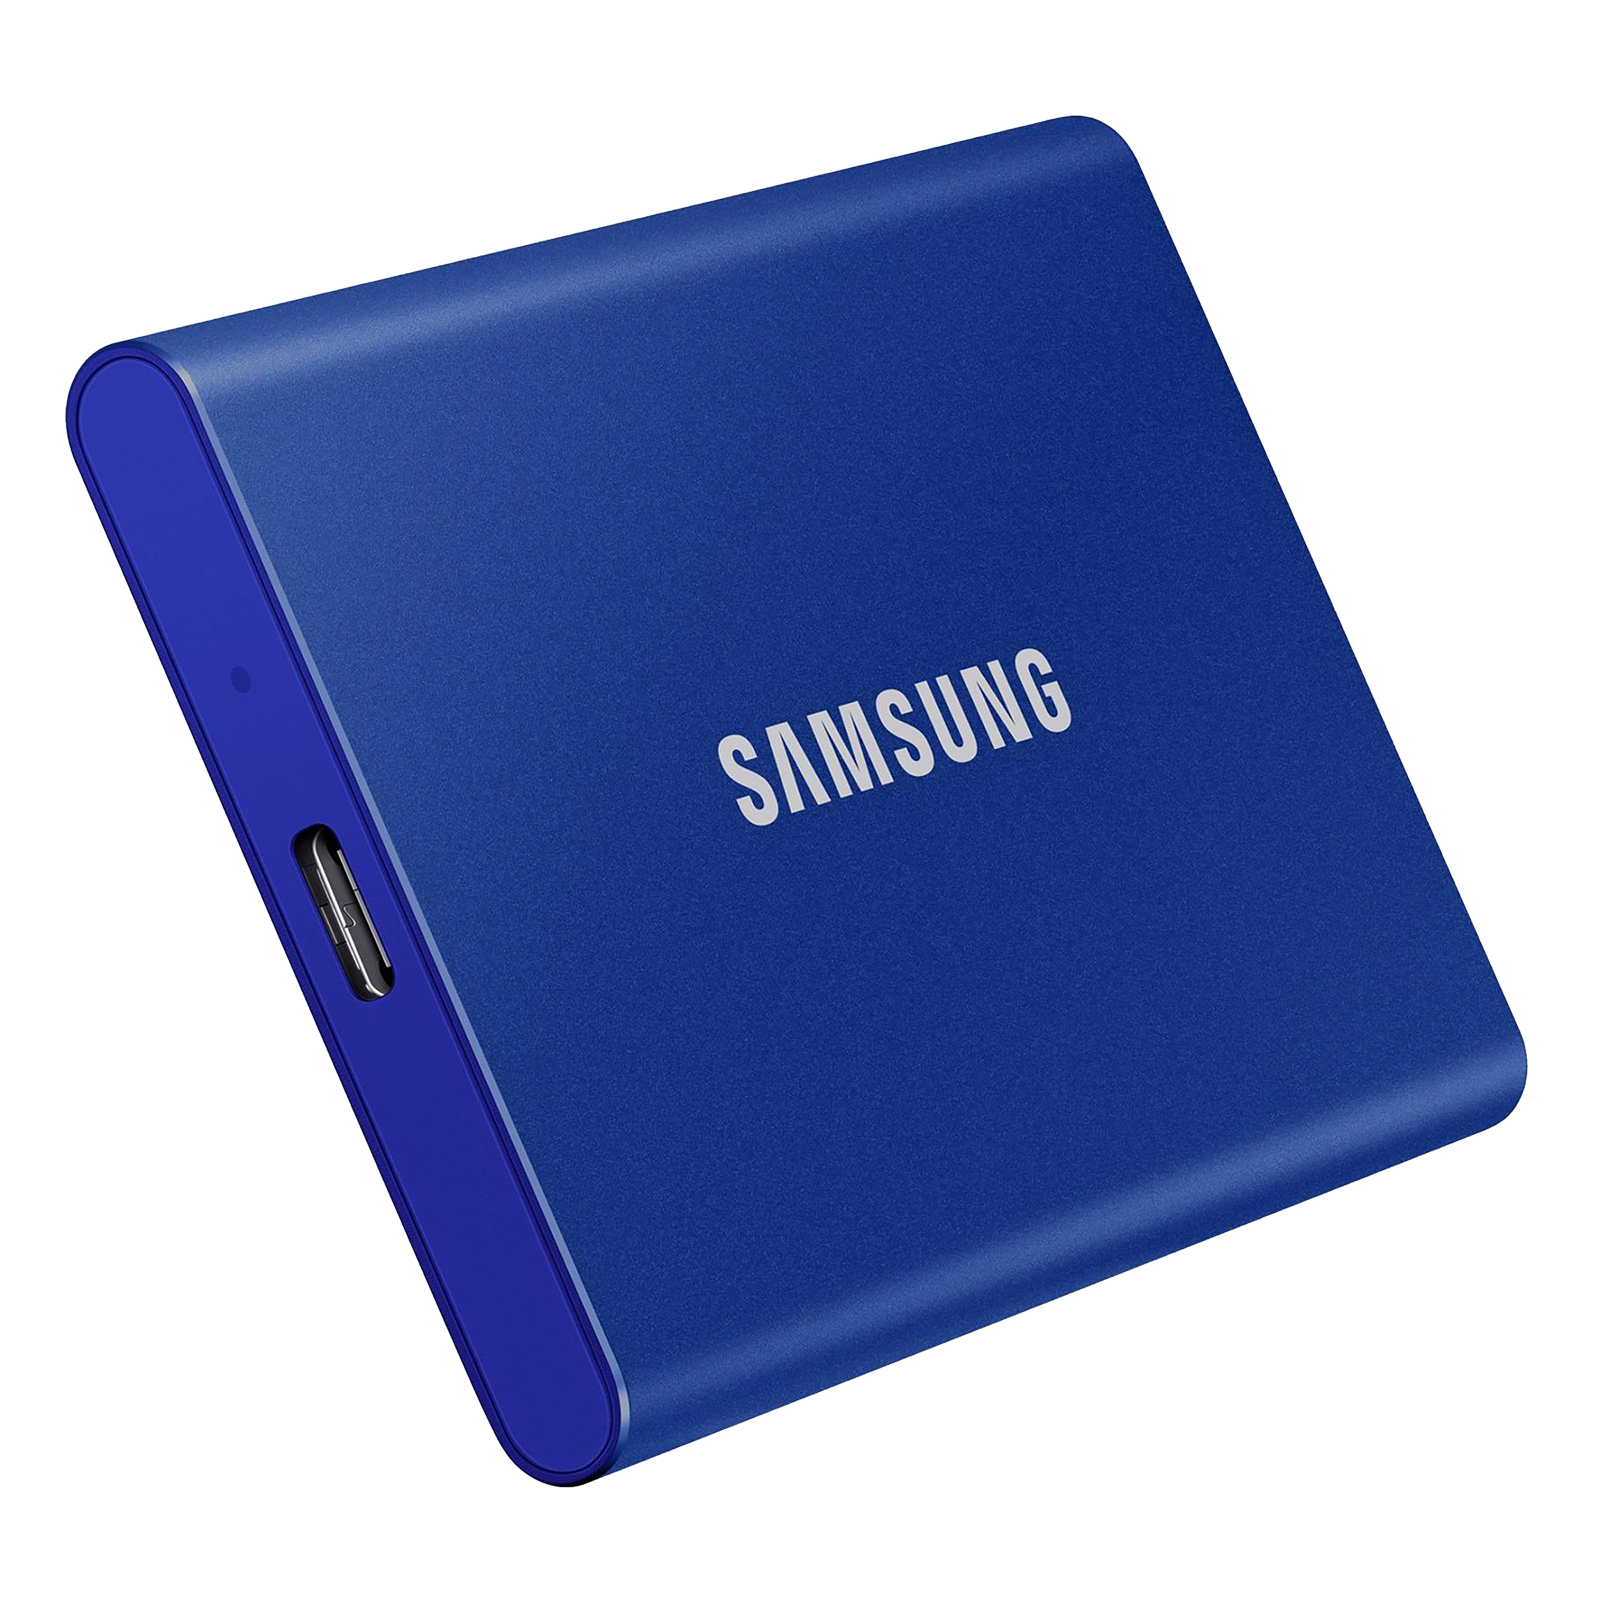 Portable SSD T7 TOUCH USB 3.2 500GB (Black) Memory & Storage - MU